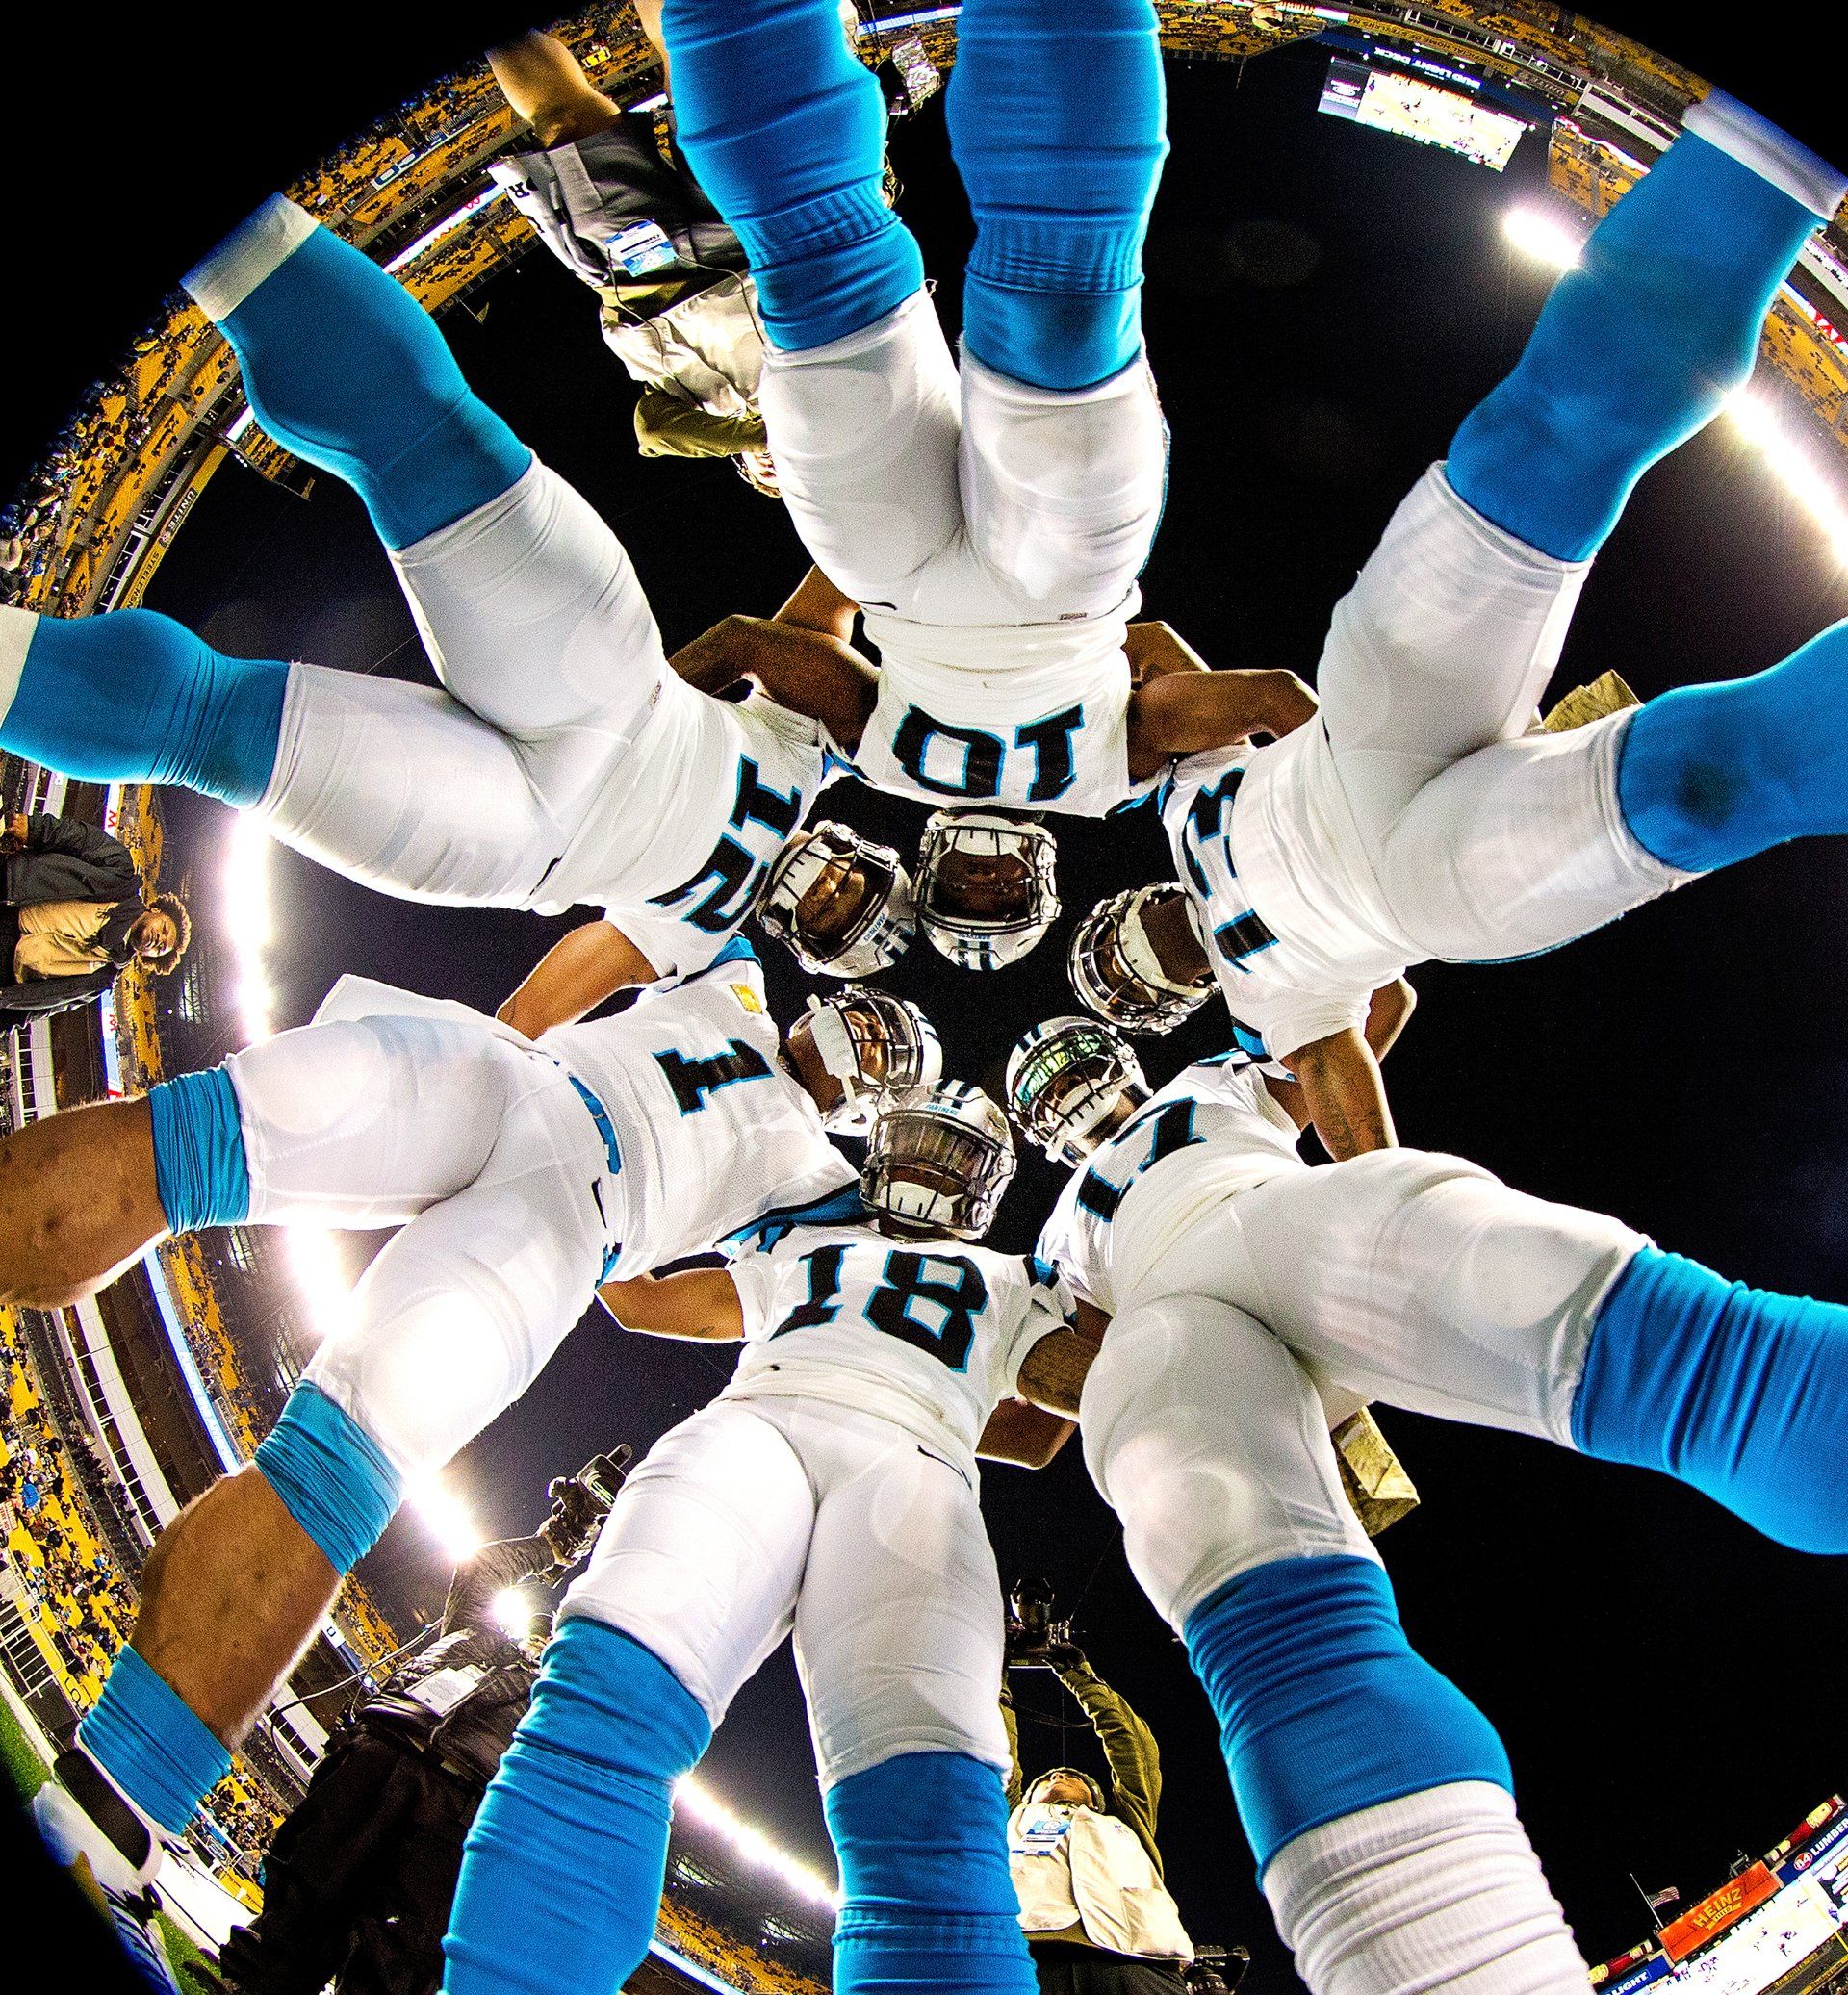 Creative angle shows the inside of a Carolina Panthers football team huddle